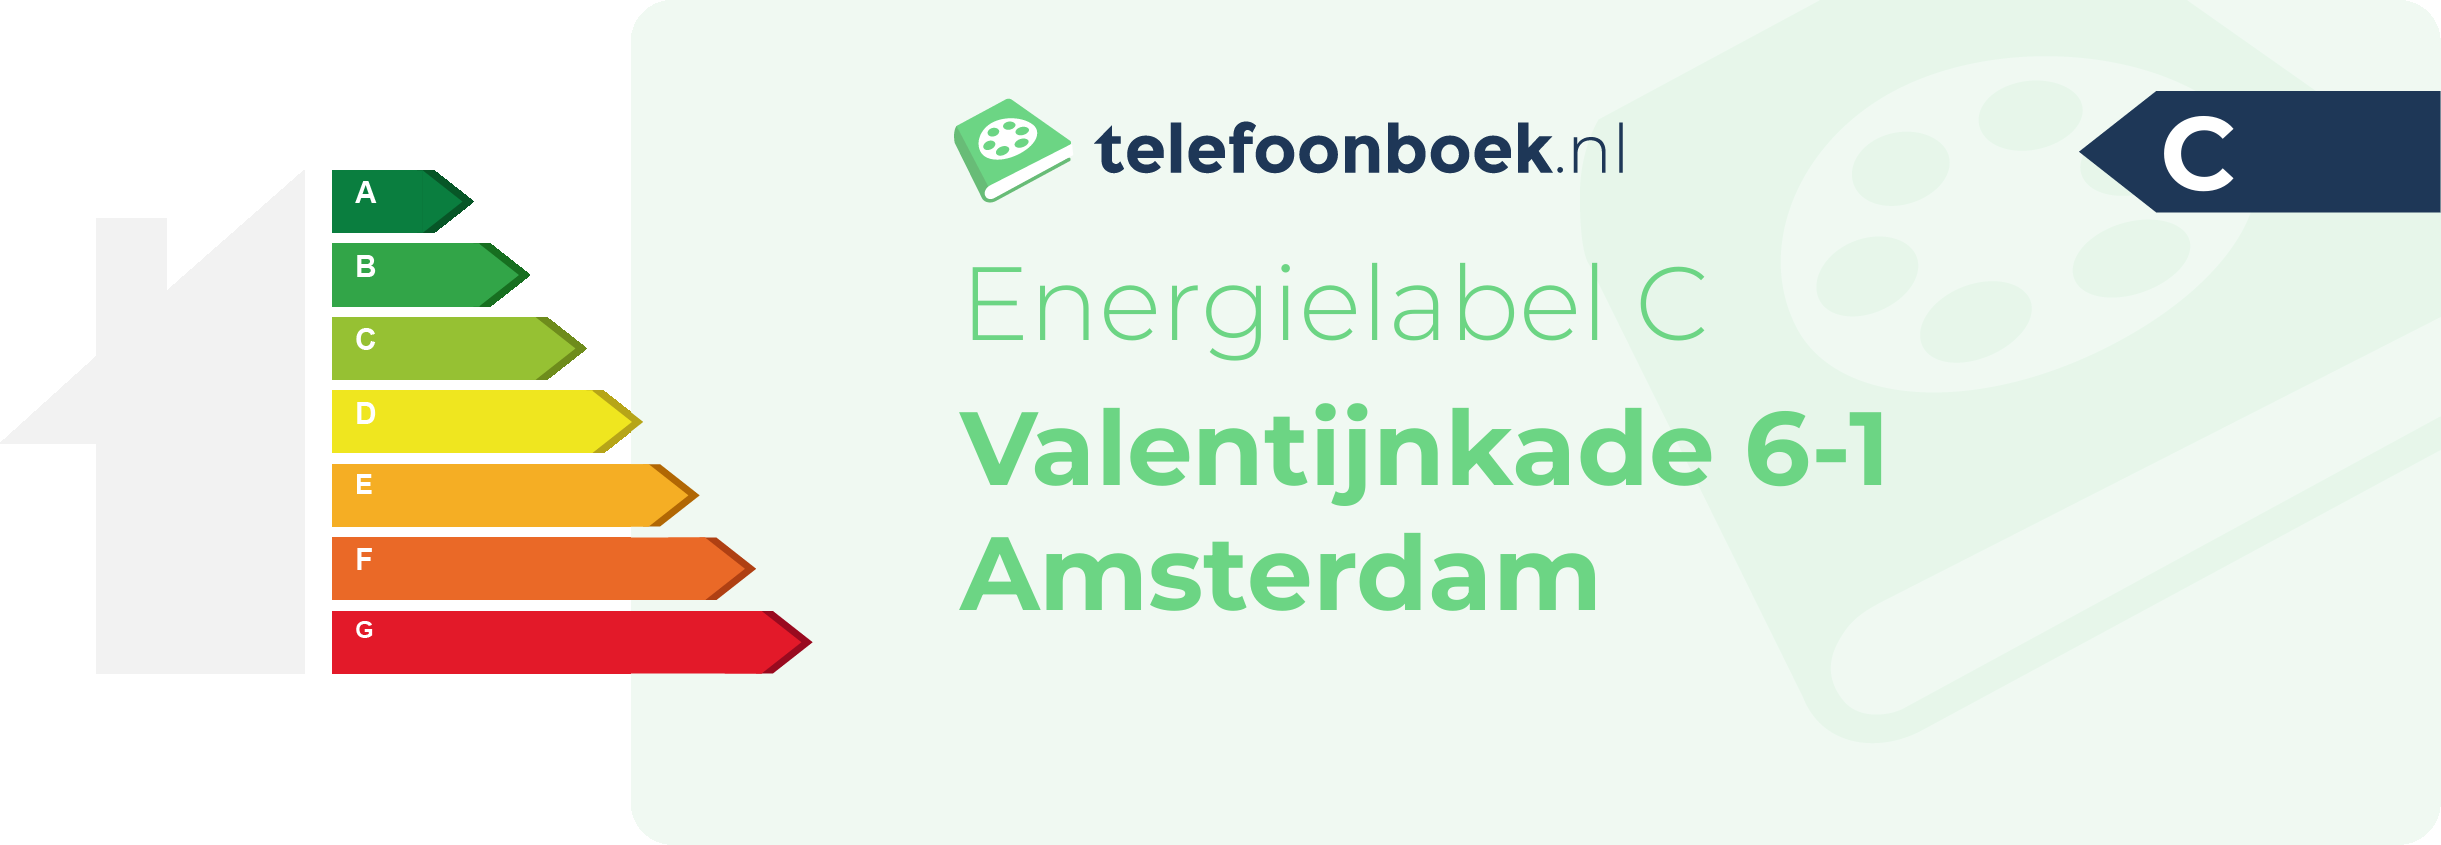 Energielabel Valentijnkade 6-1 Amsterdam